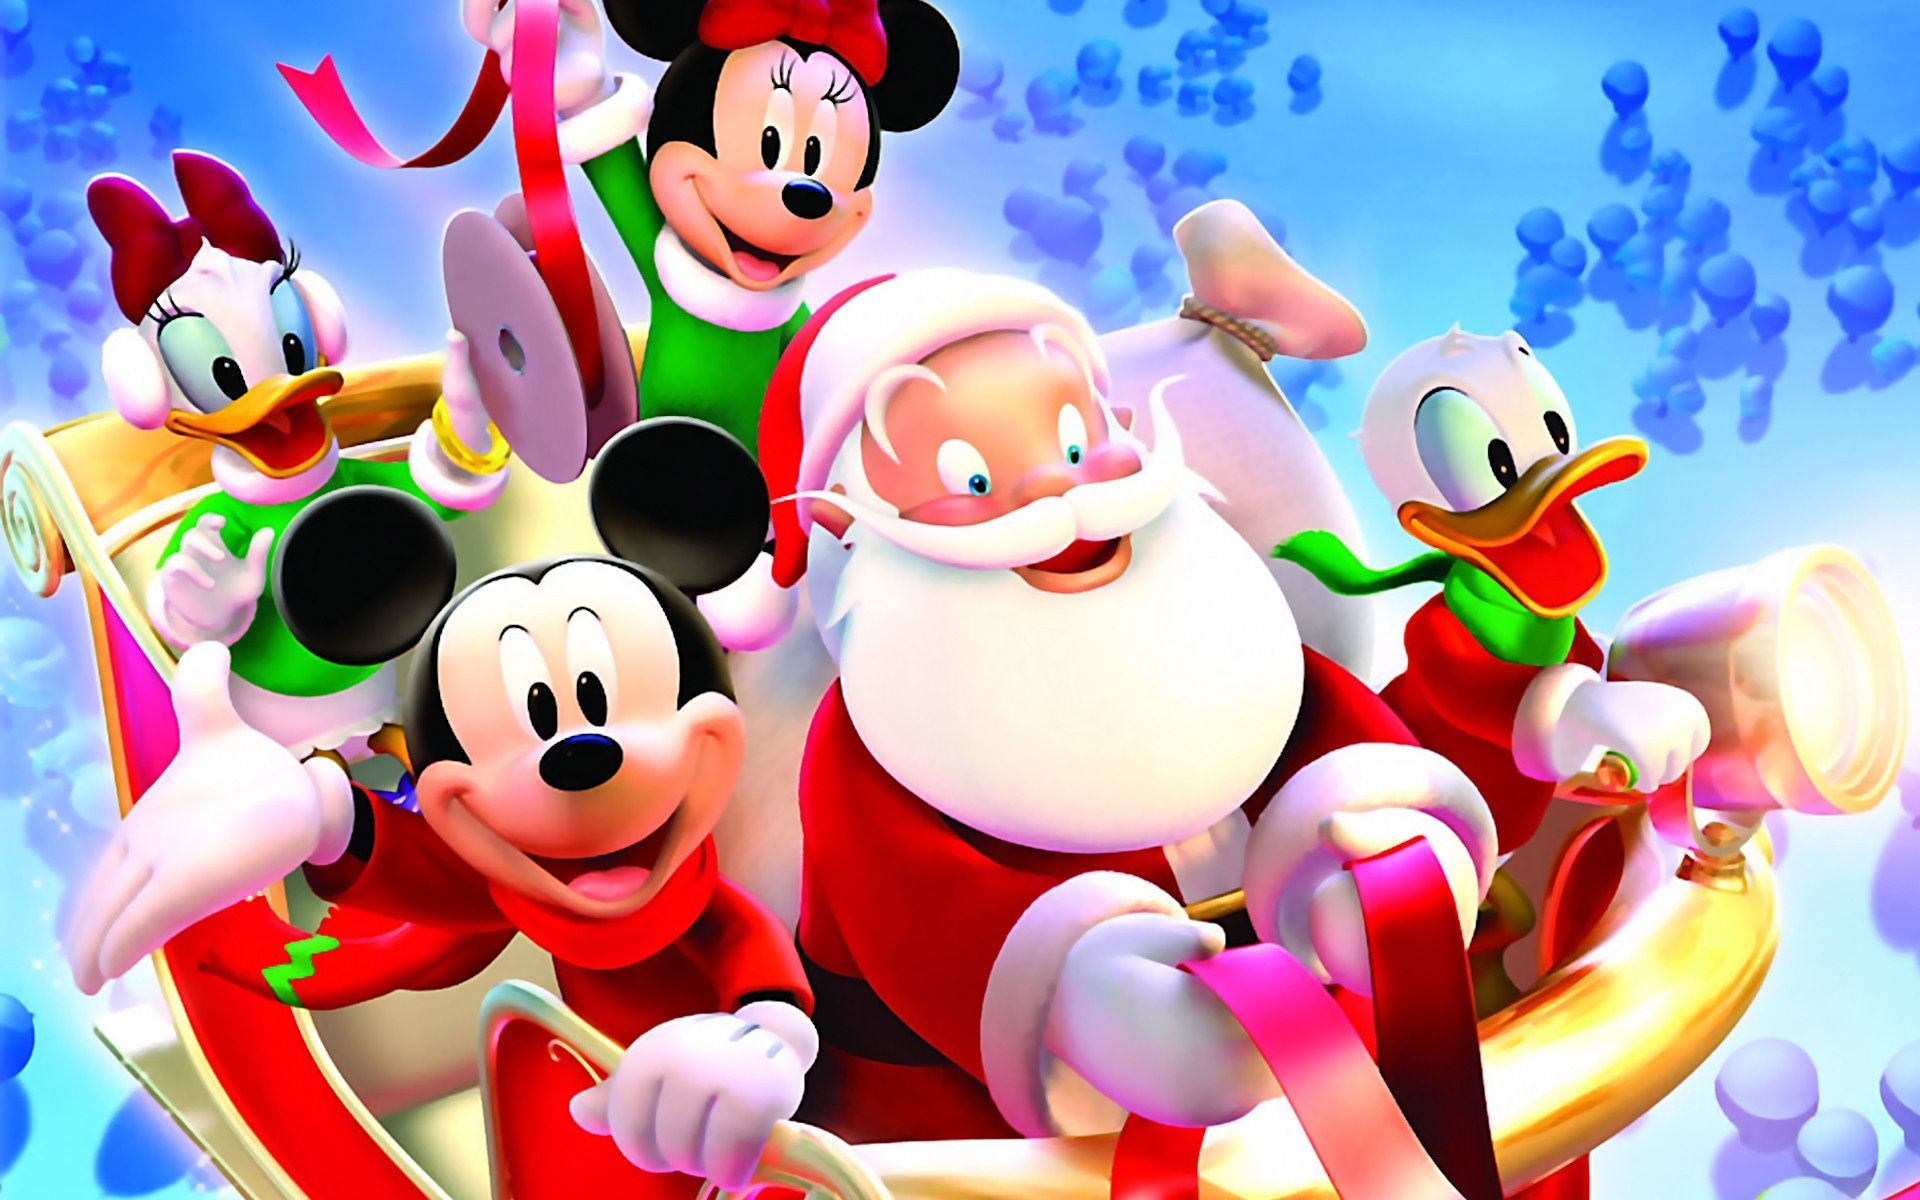 Disney Christmas Wallpaper HD Mickey Mouse With Santa Claus, Wallpaper13.com